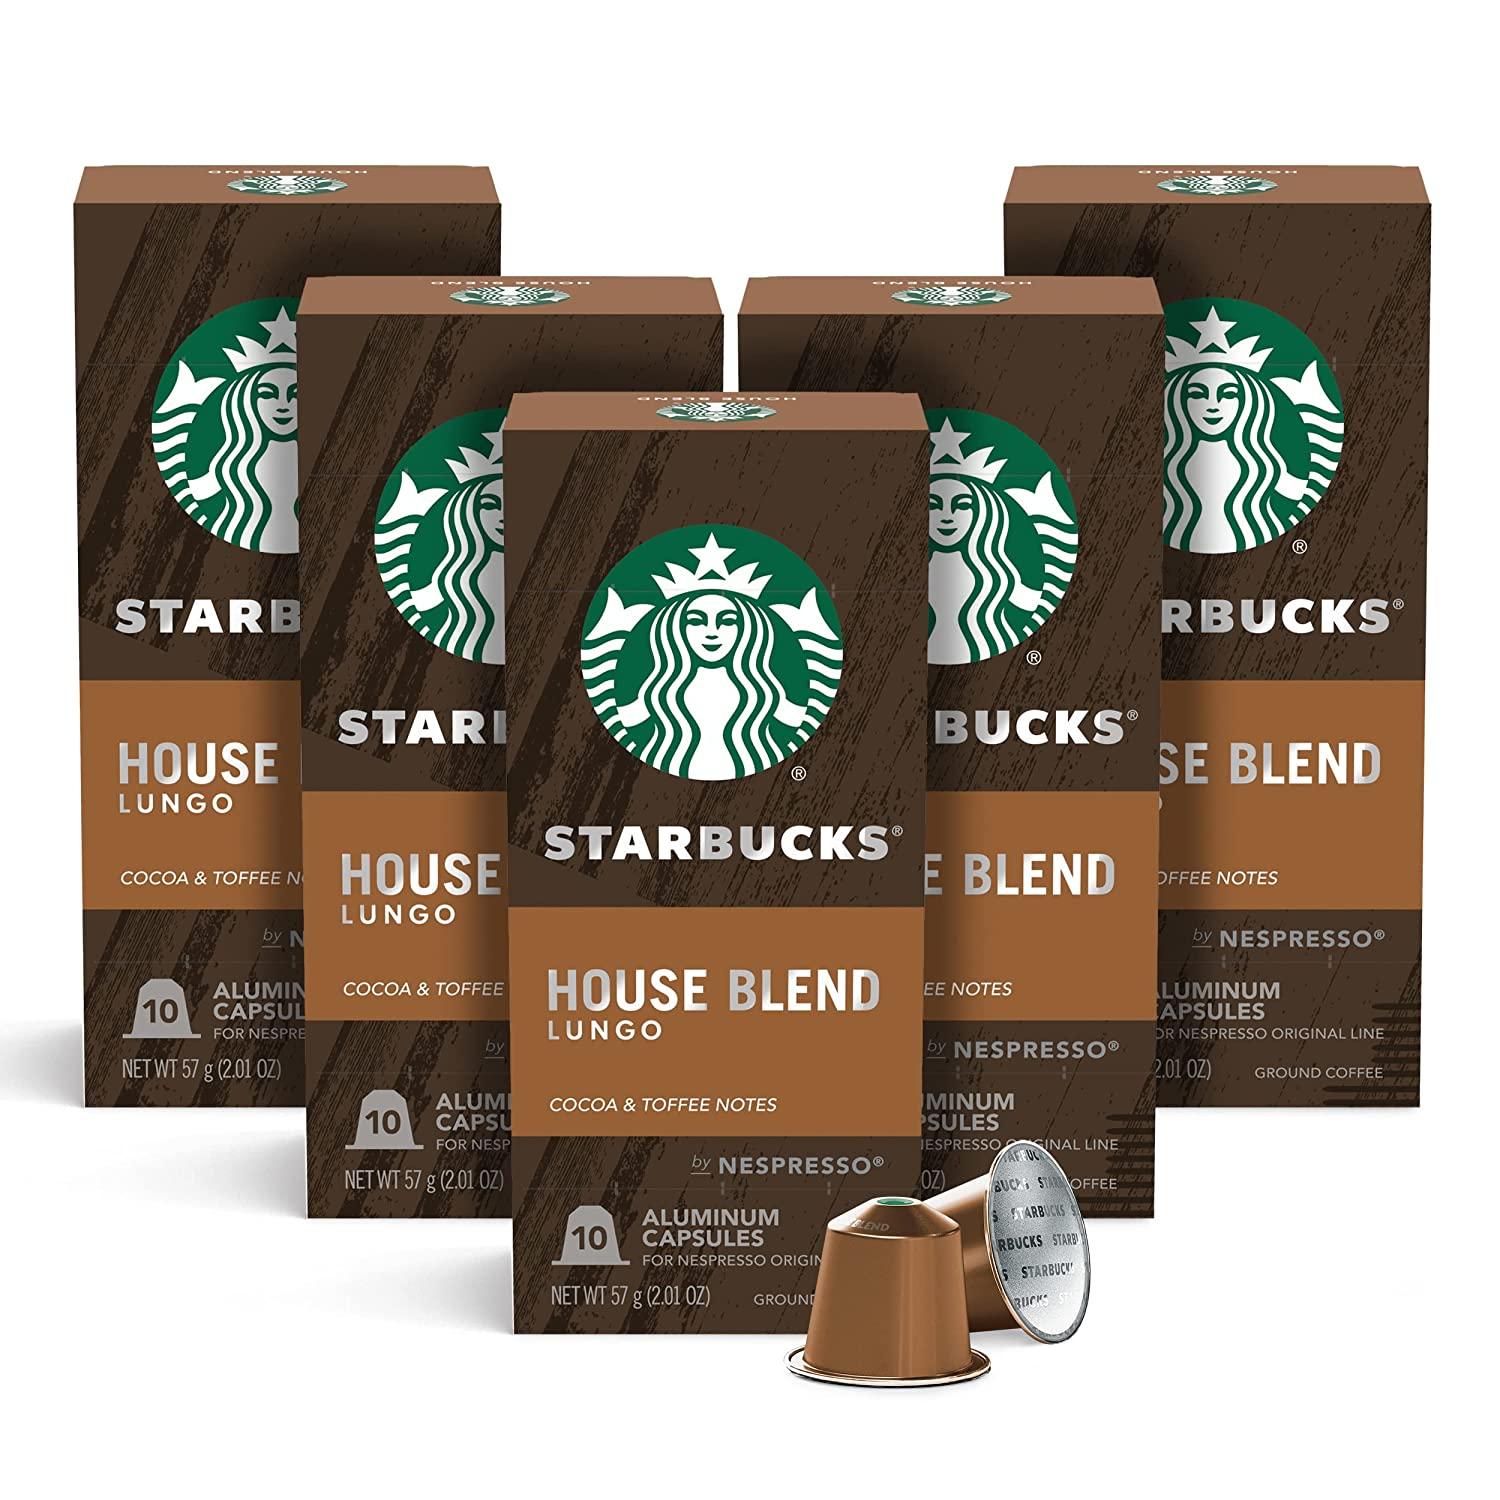 50 Starbucks by Nespresso Coffee Capsules for $19.99